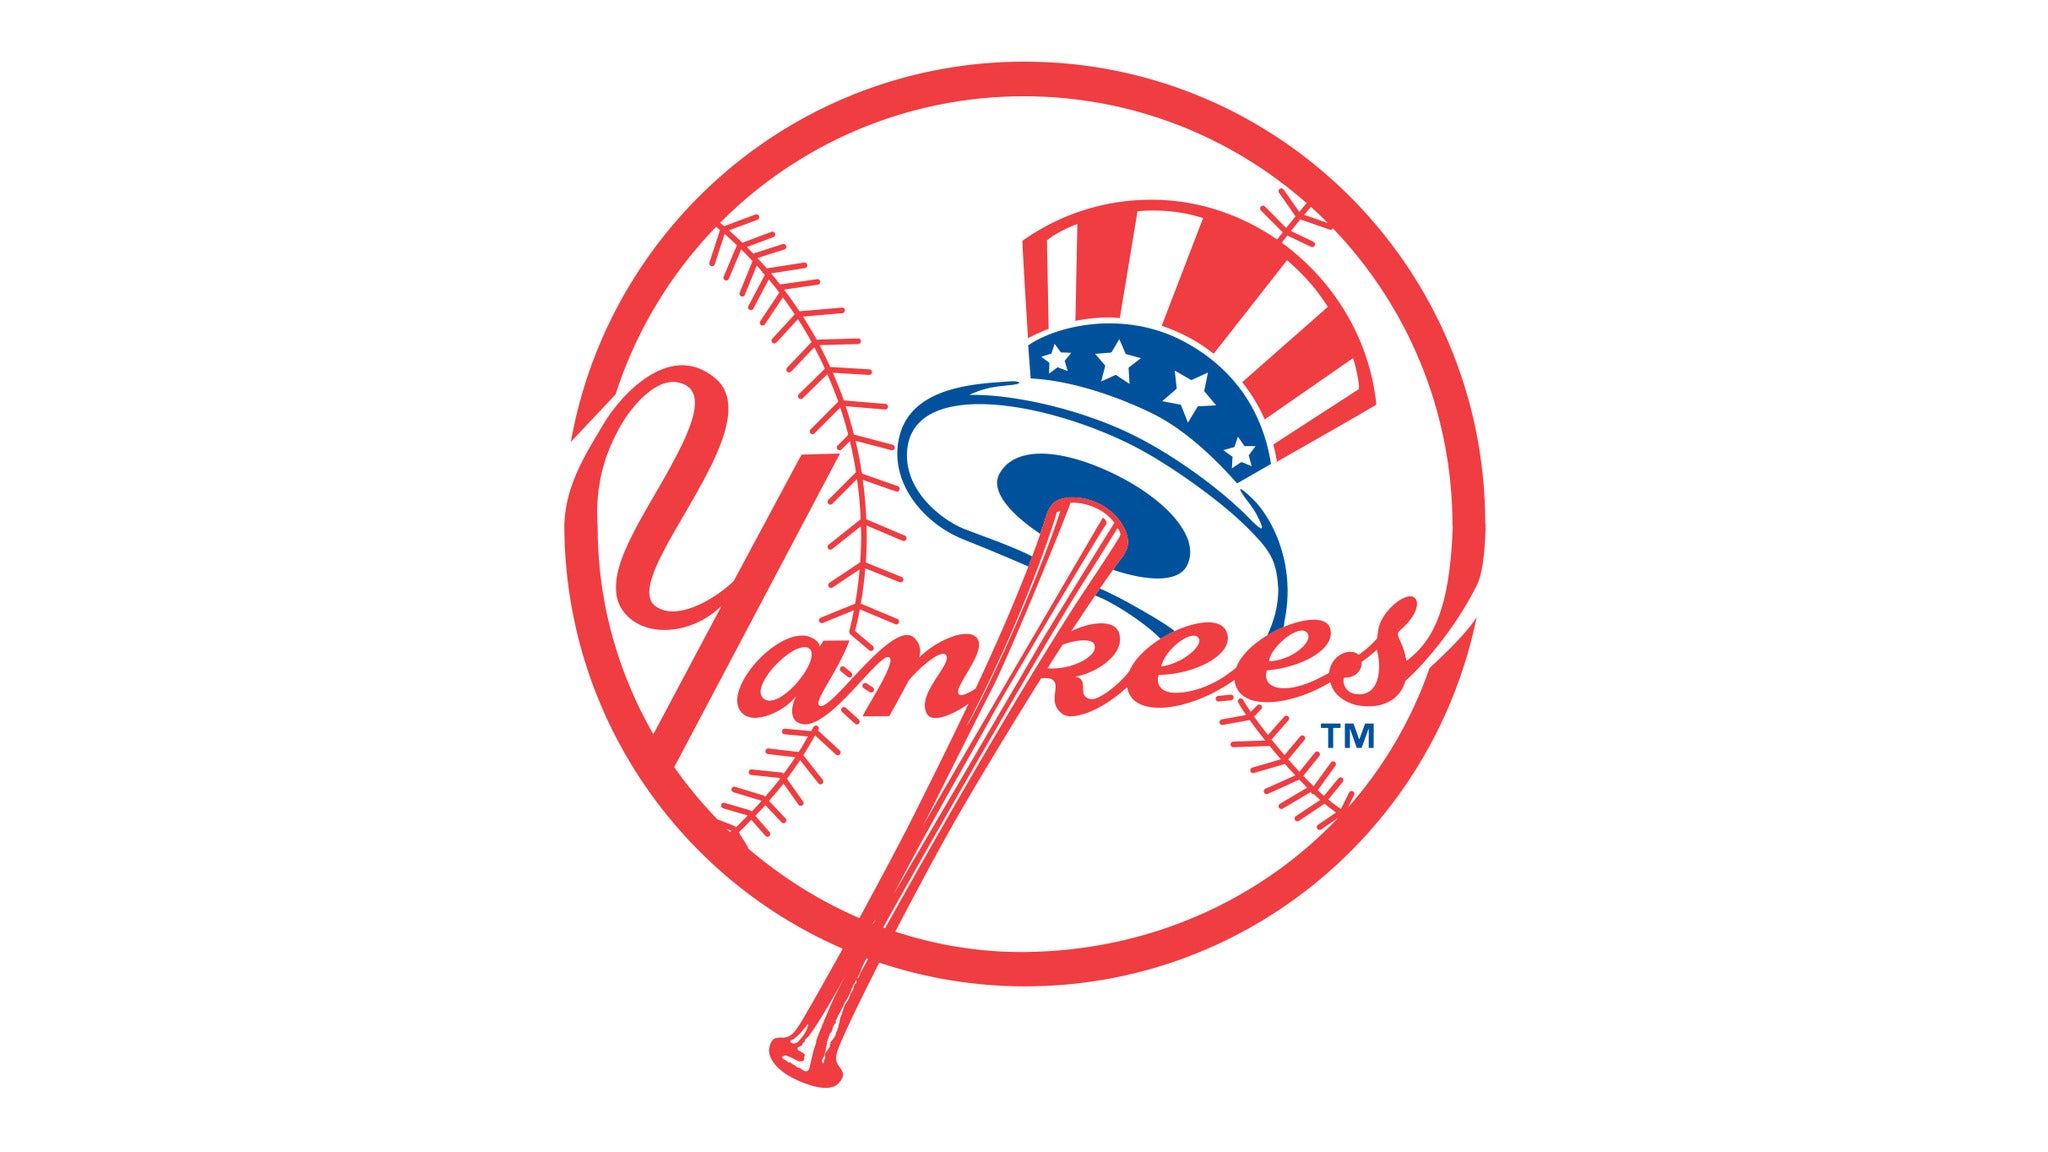 New York Yankees v. Kansas City Royals * Premium Seating